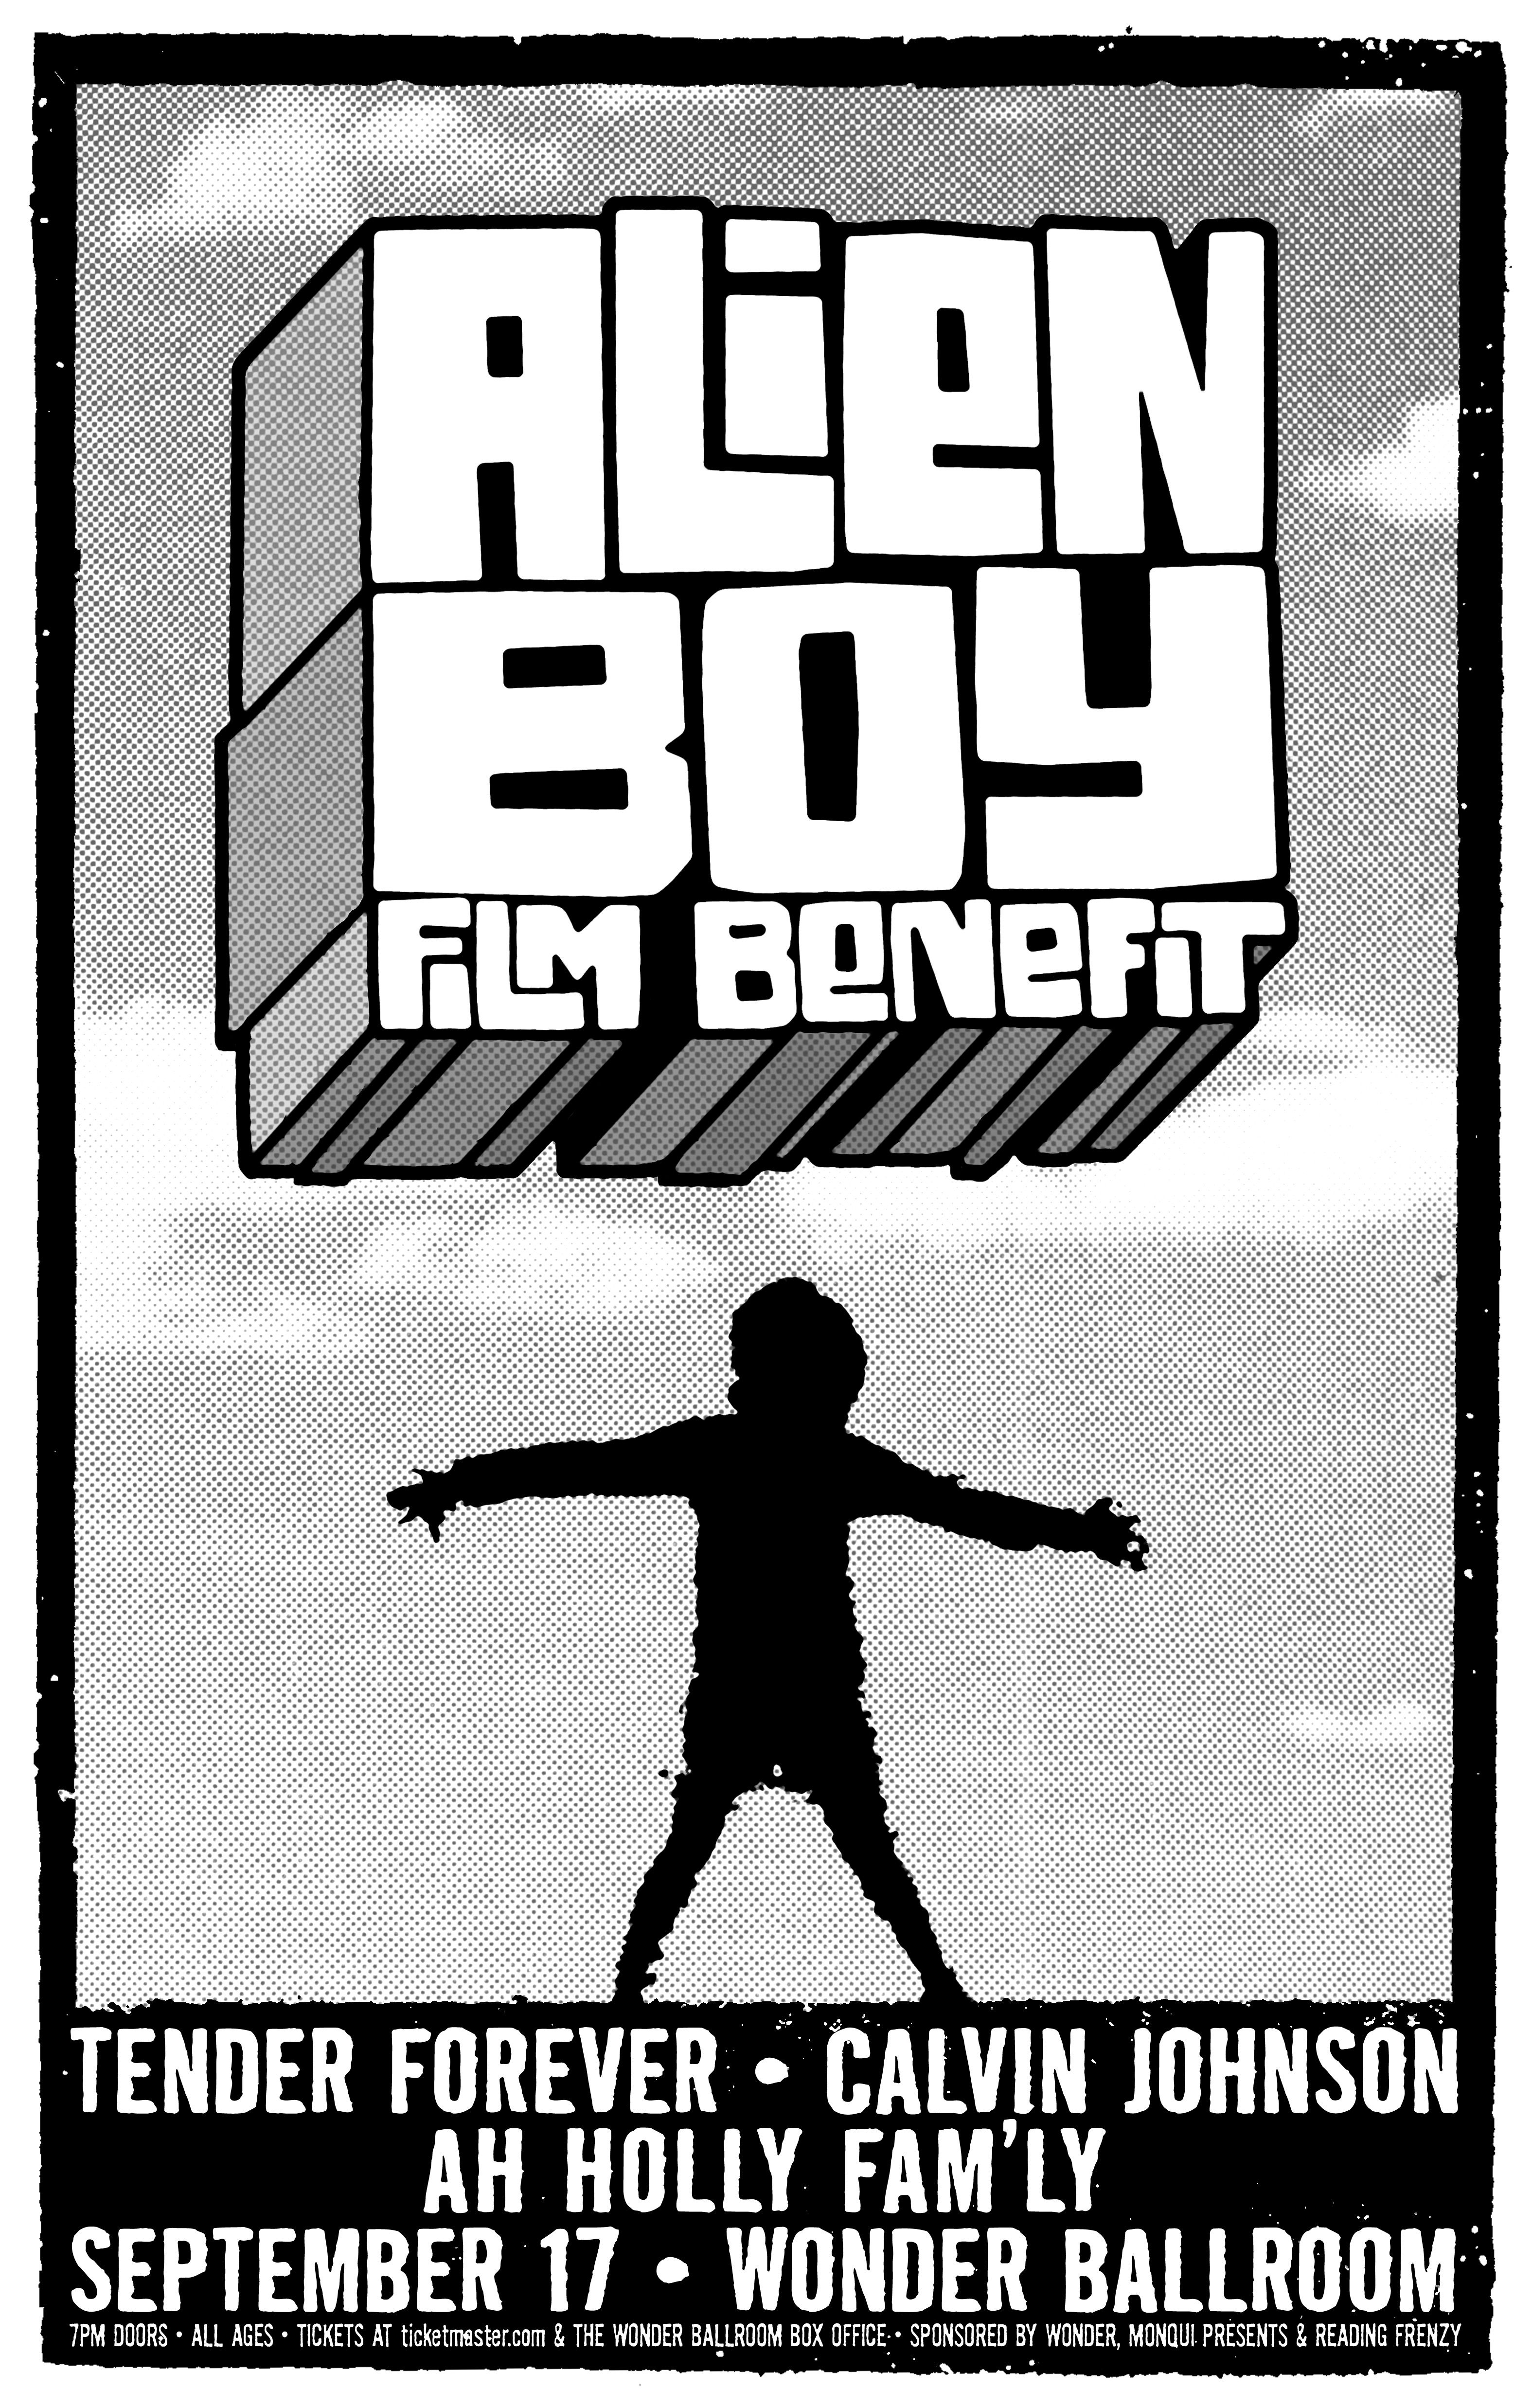 MXP-149.4 Alien Boy Benefit - Event 2009 Wonder Ballroom  Sep 17 Concert Poster